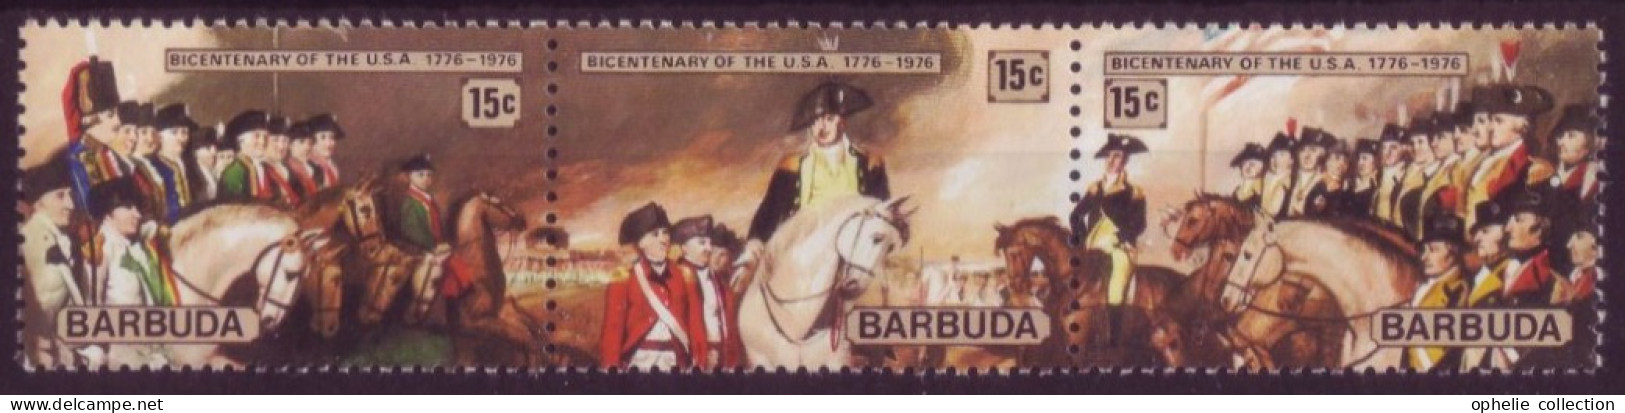 Amérique - Barbuda - Bandeau Bicentenary Of The USA  1776-1976  - 7334 - America (Other)